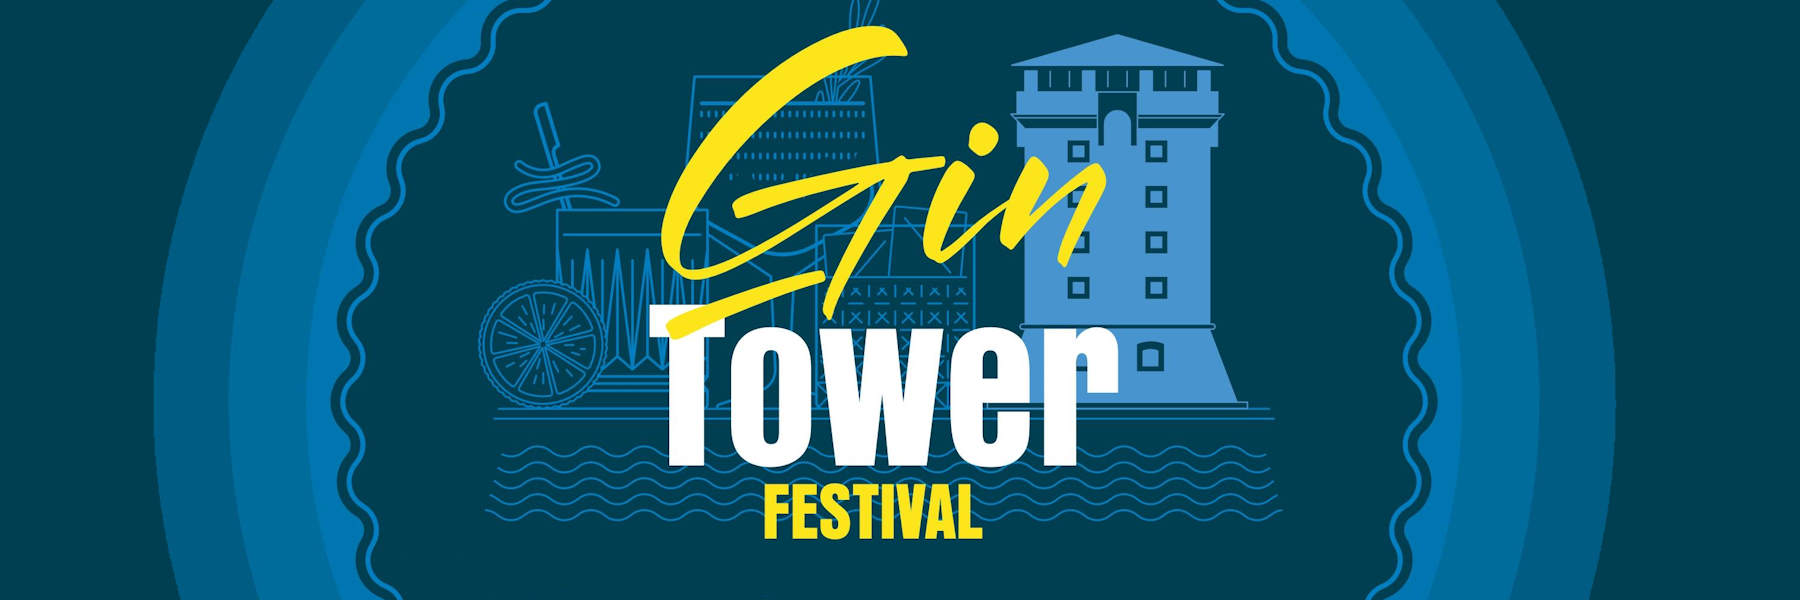 Gin Tower Festival